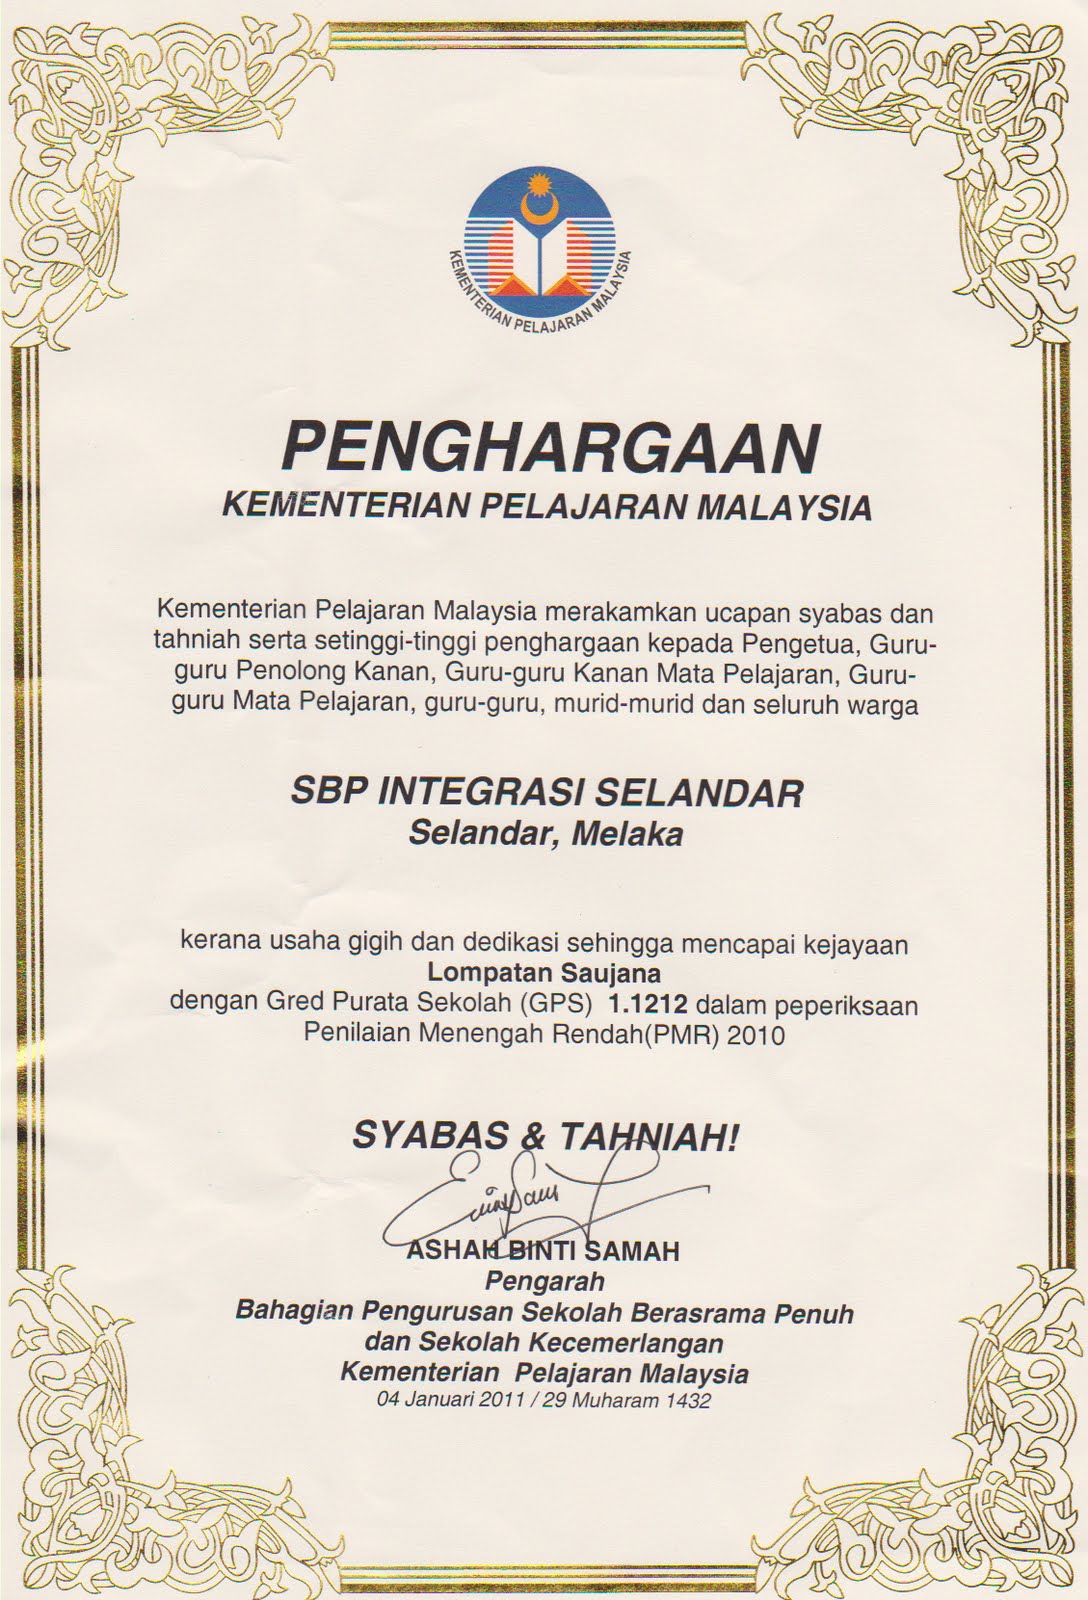 Portal Rasmi SBP Integrasi Selandar: Februari 2011